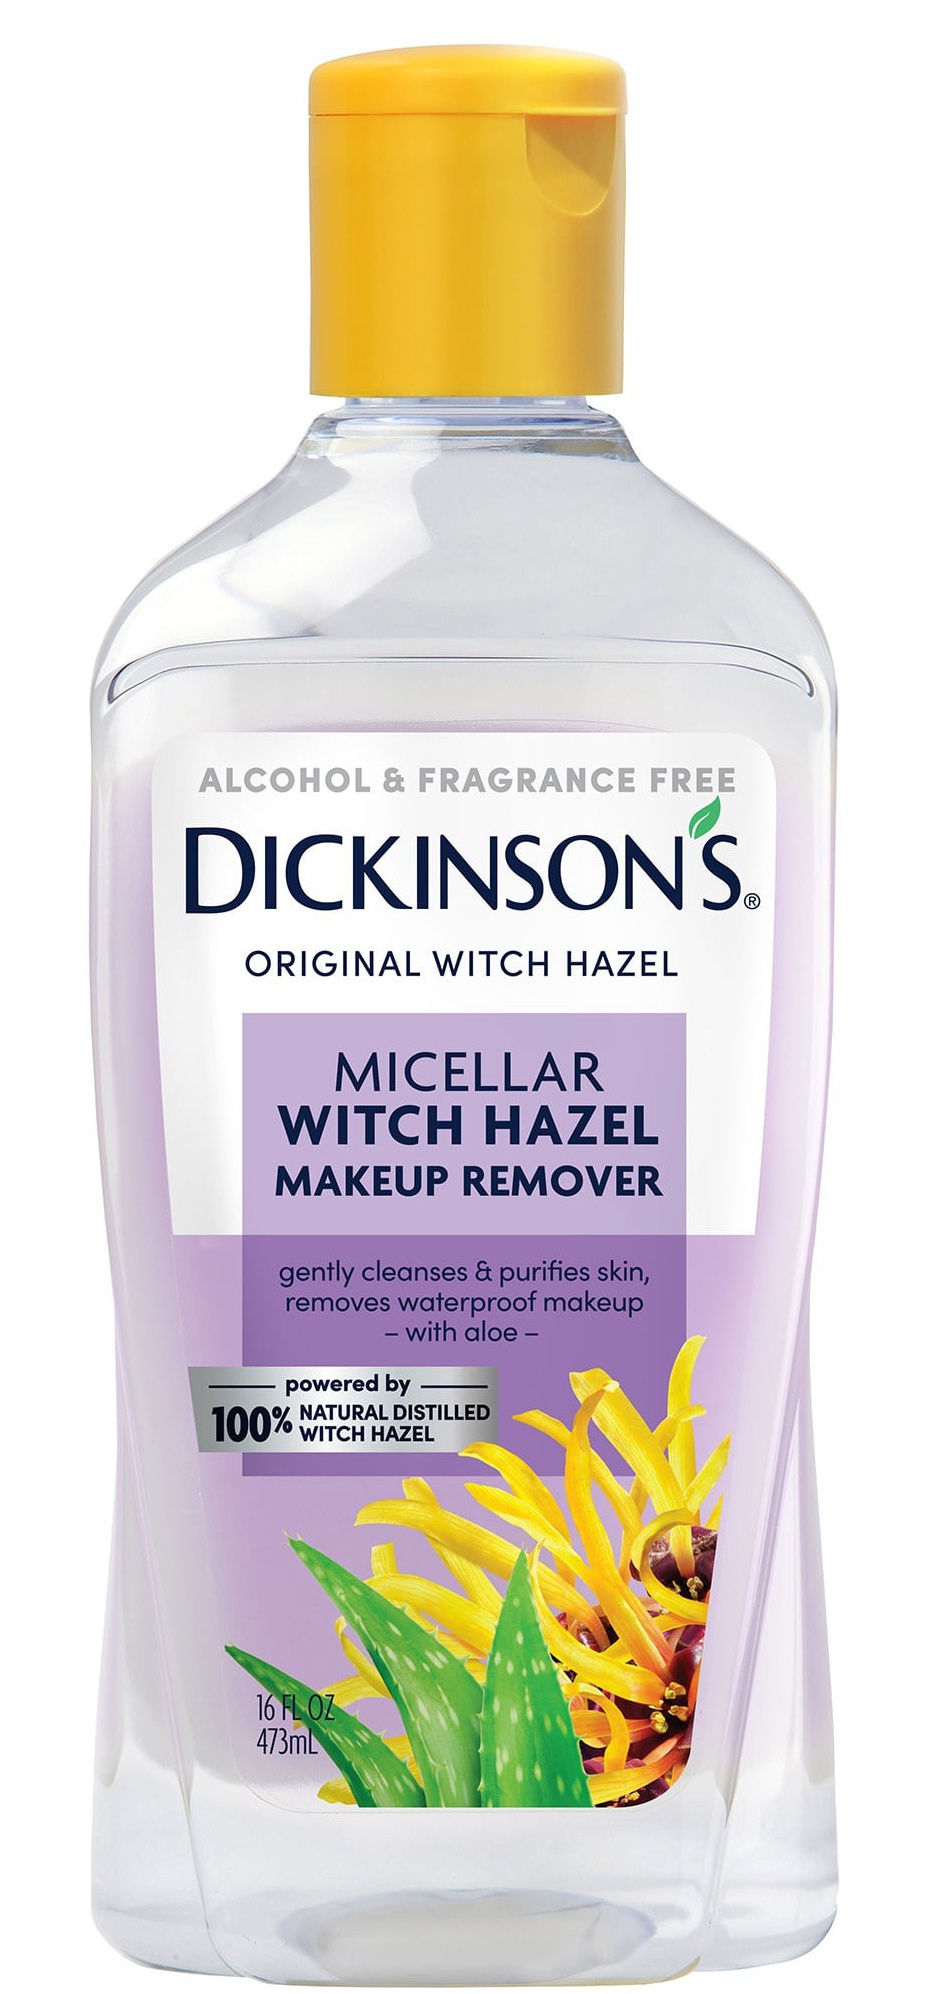 Dickinson’s Micellar Witch Hazel Makeup Remover